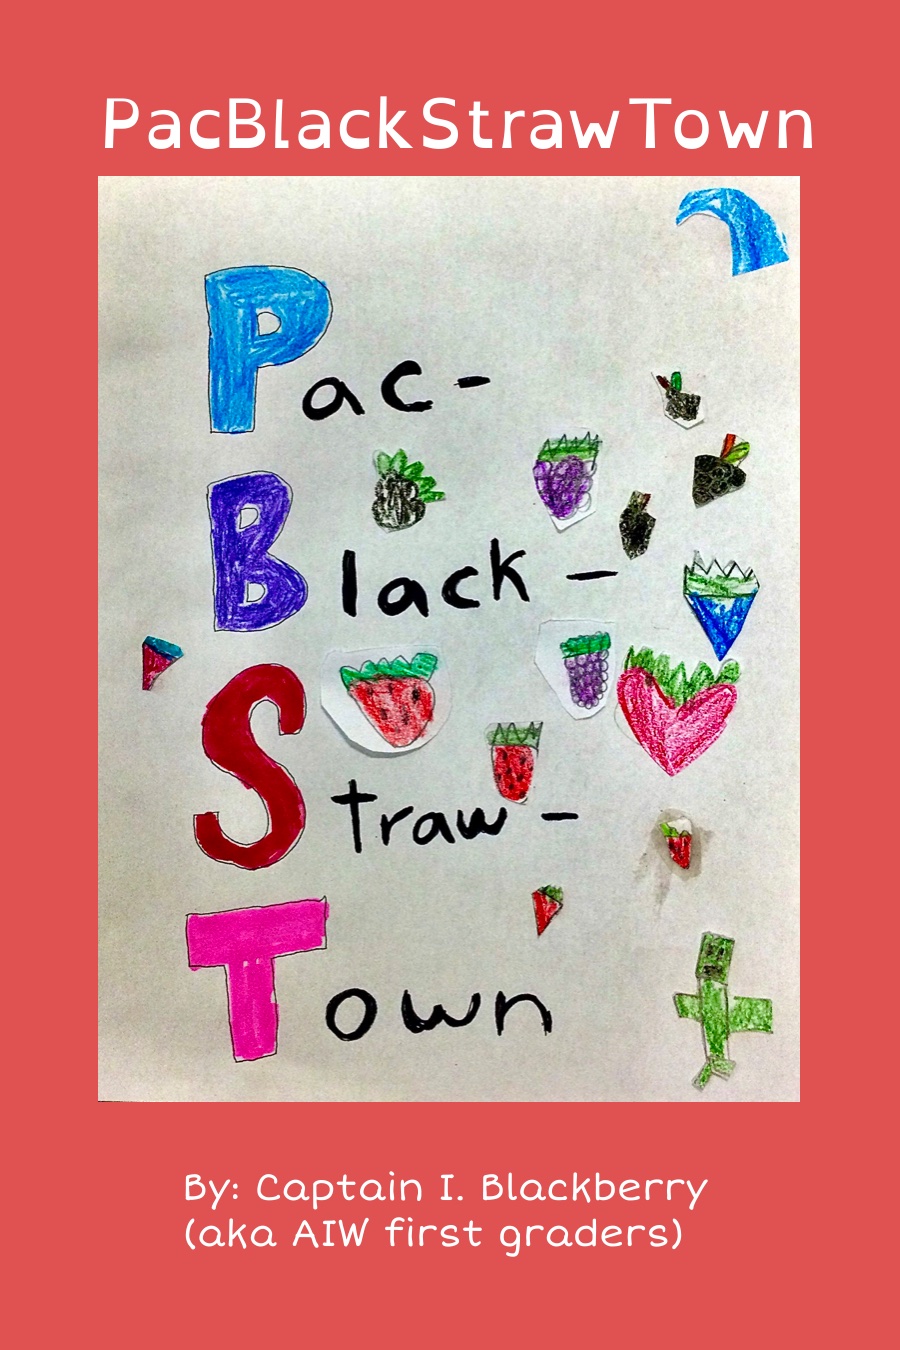 PacBlackStrawtown by Cupertino 2 – Aug 1 – 1st Grade